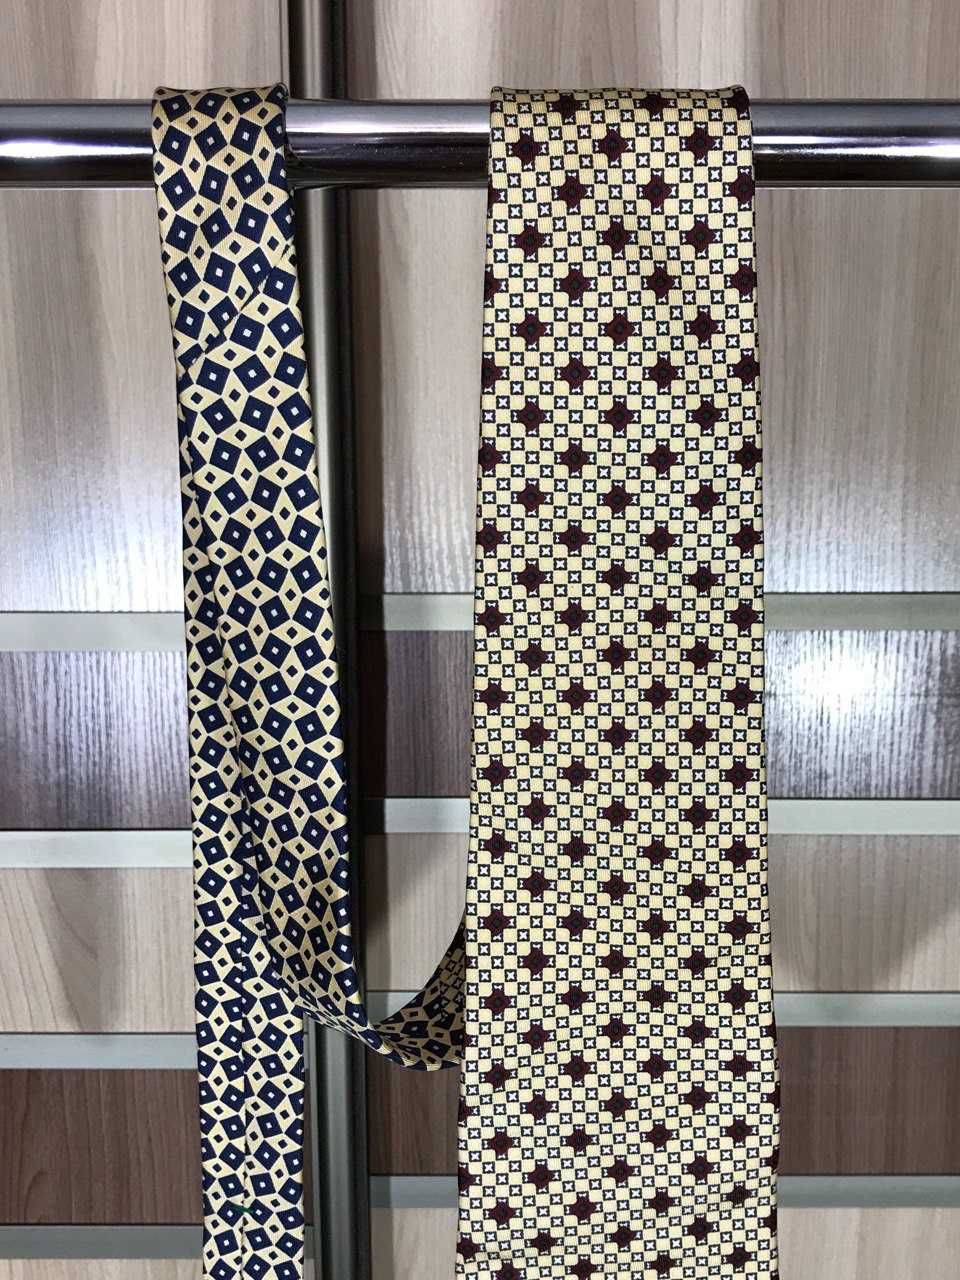 Vintage галстук Tommy Hilfiger из 100% шелка